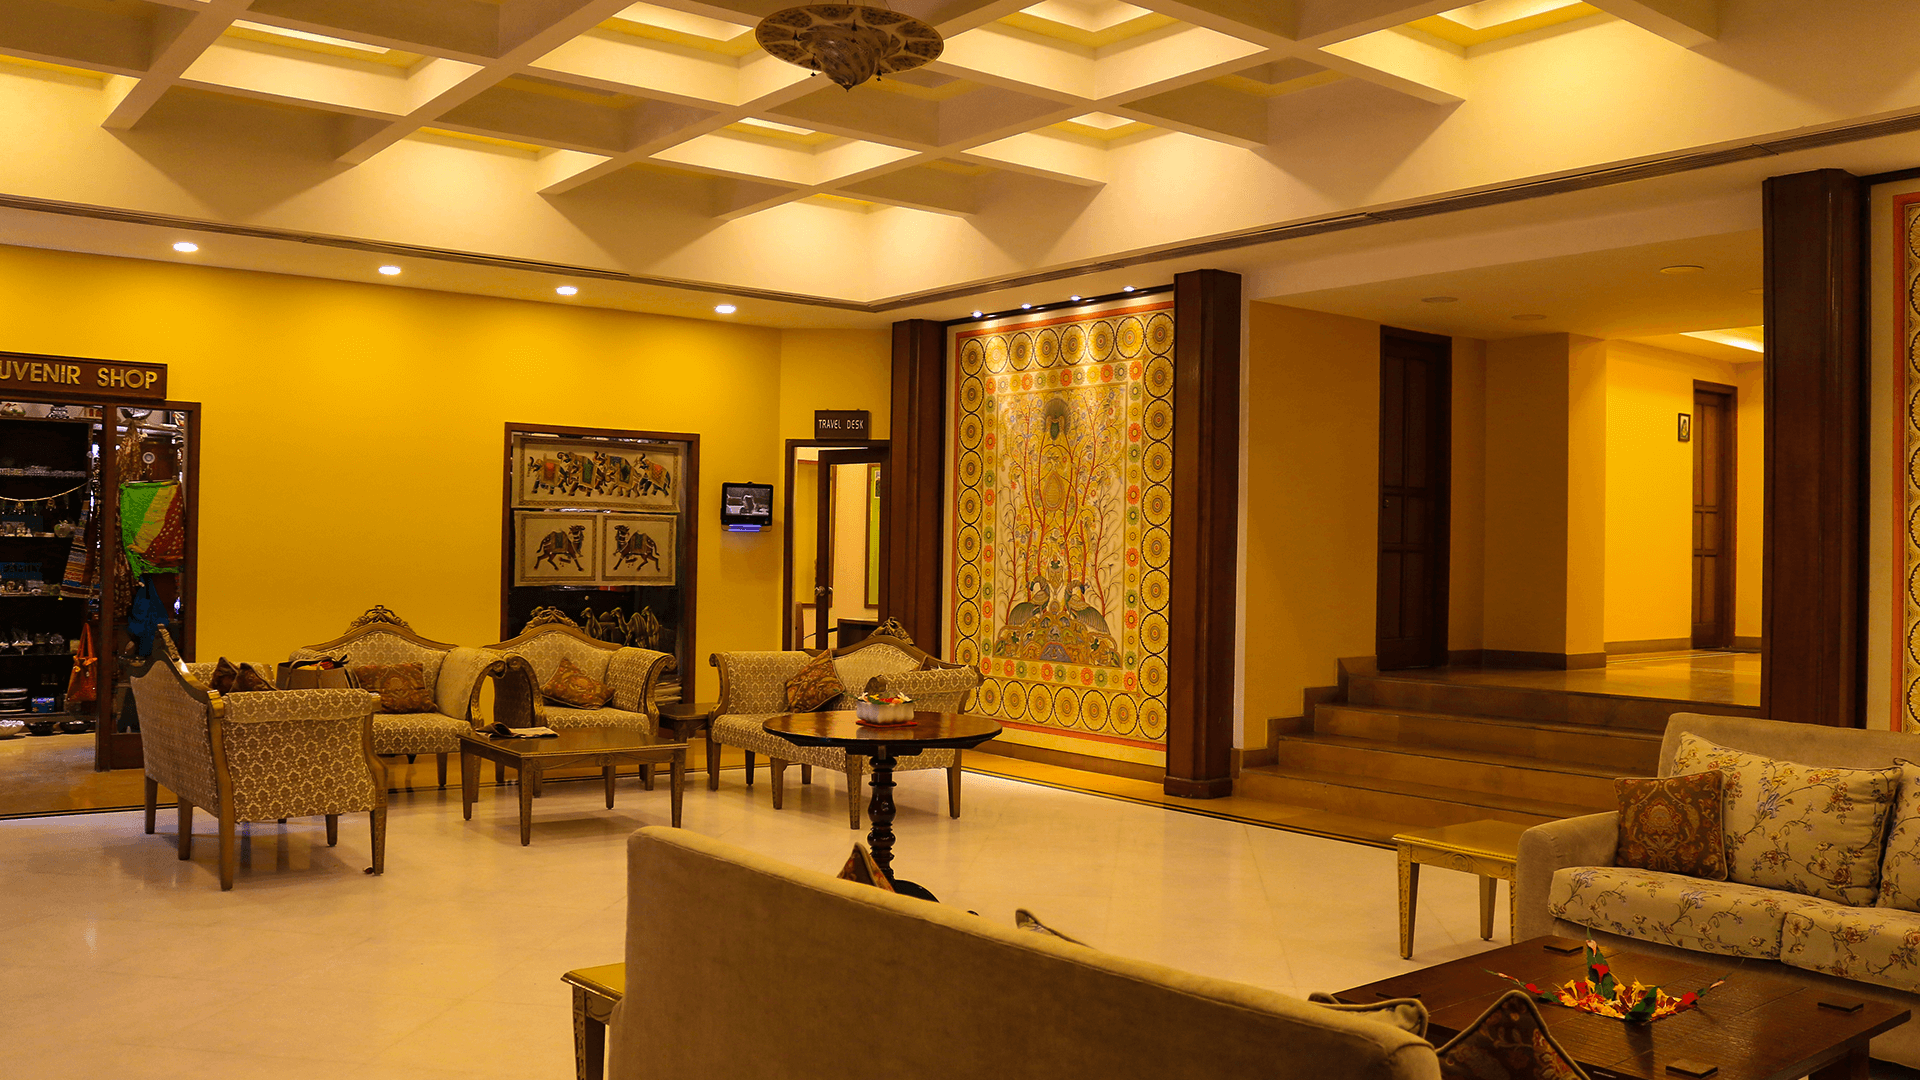 Club Mahindra Fort Resort Kumbhalgarh, Rajasthan